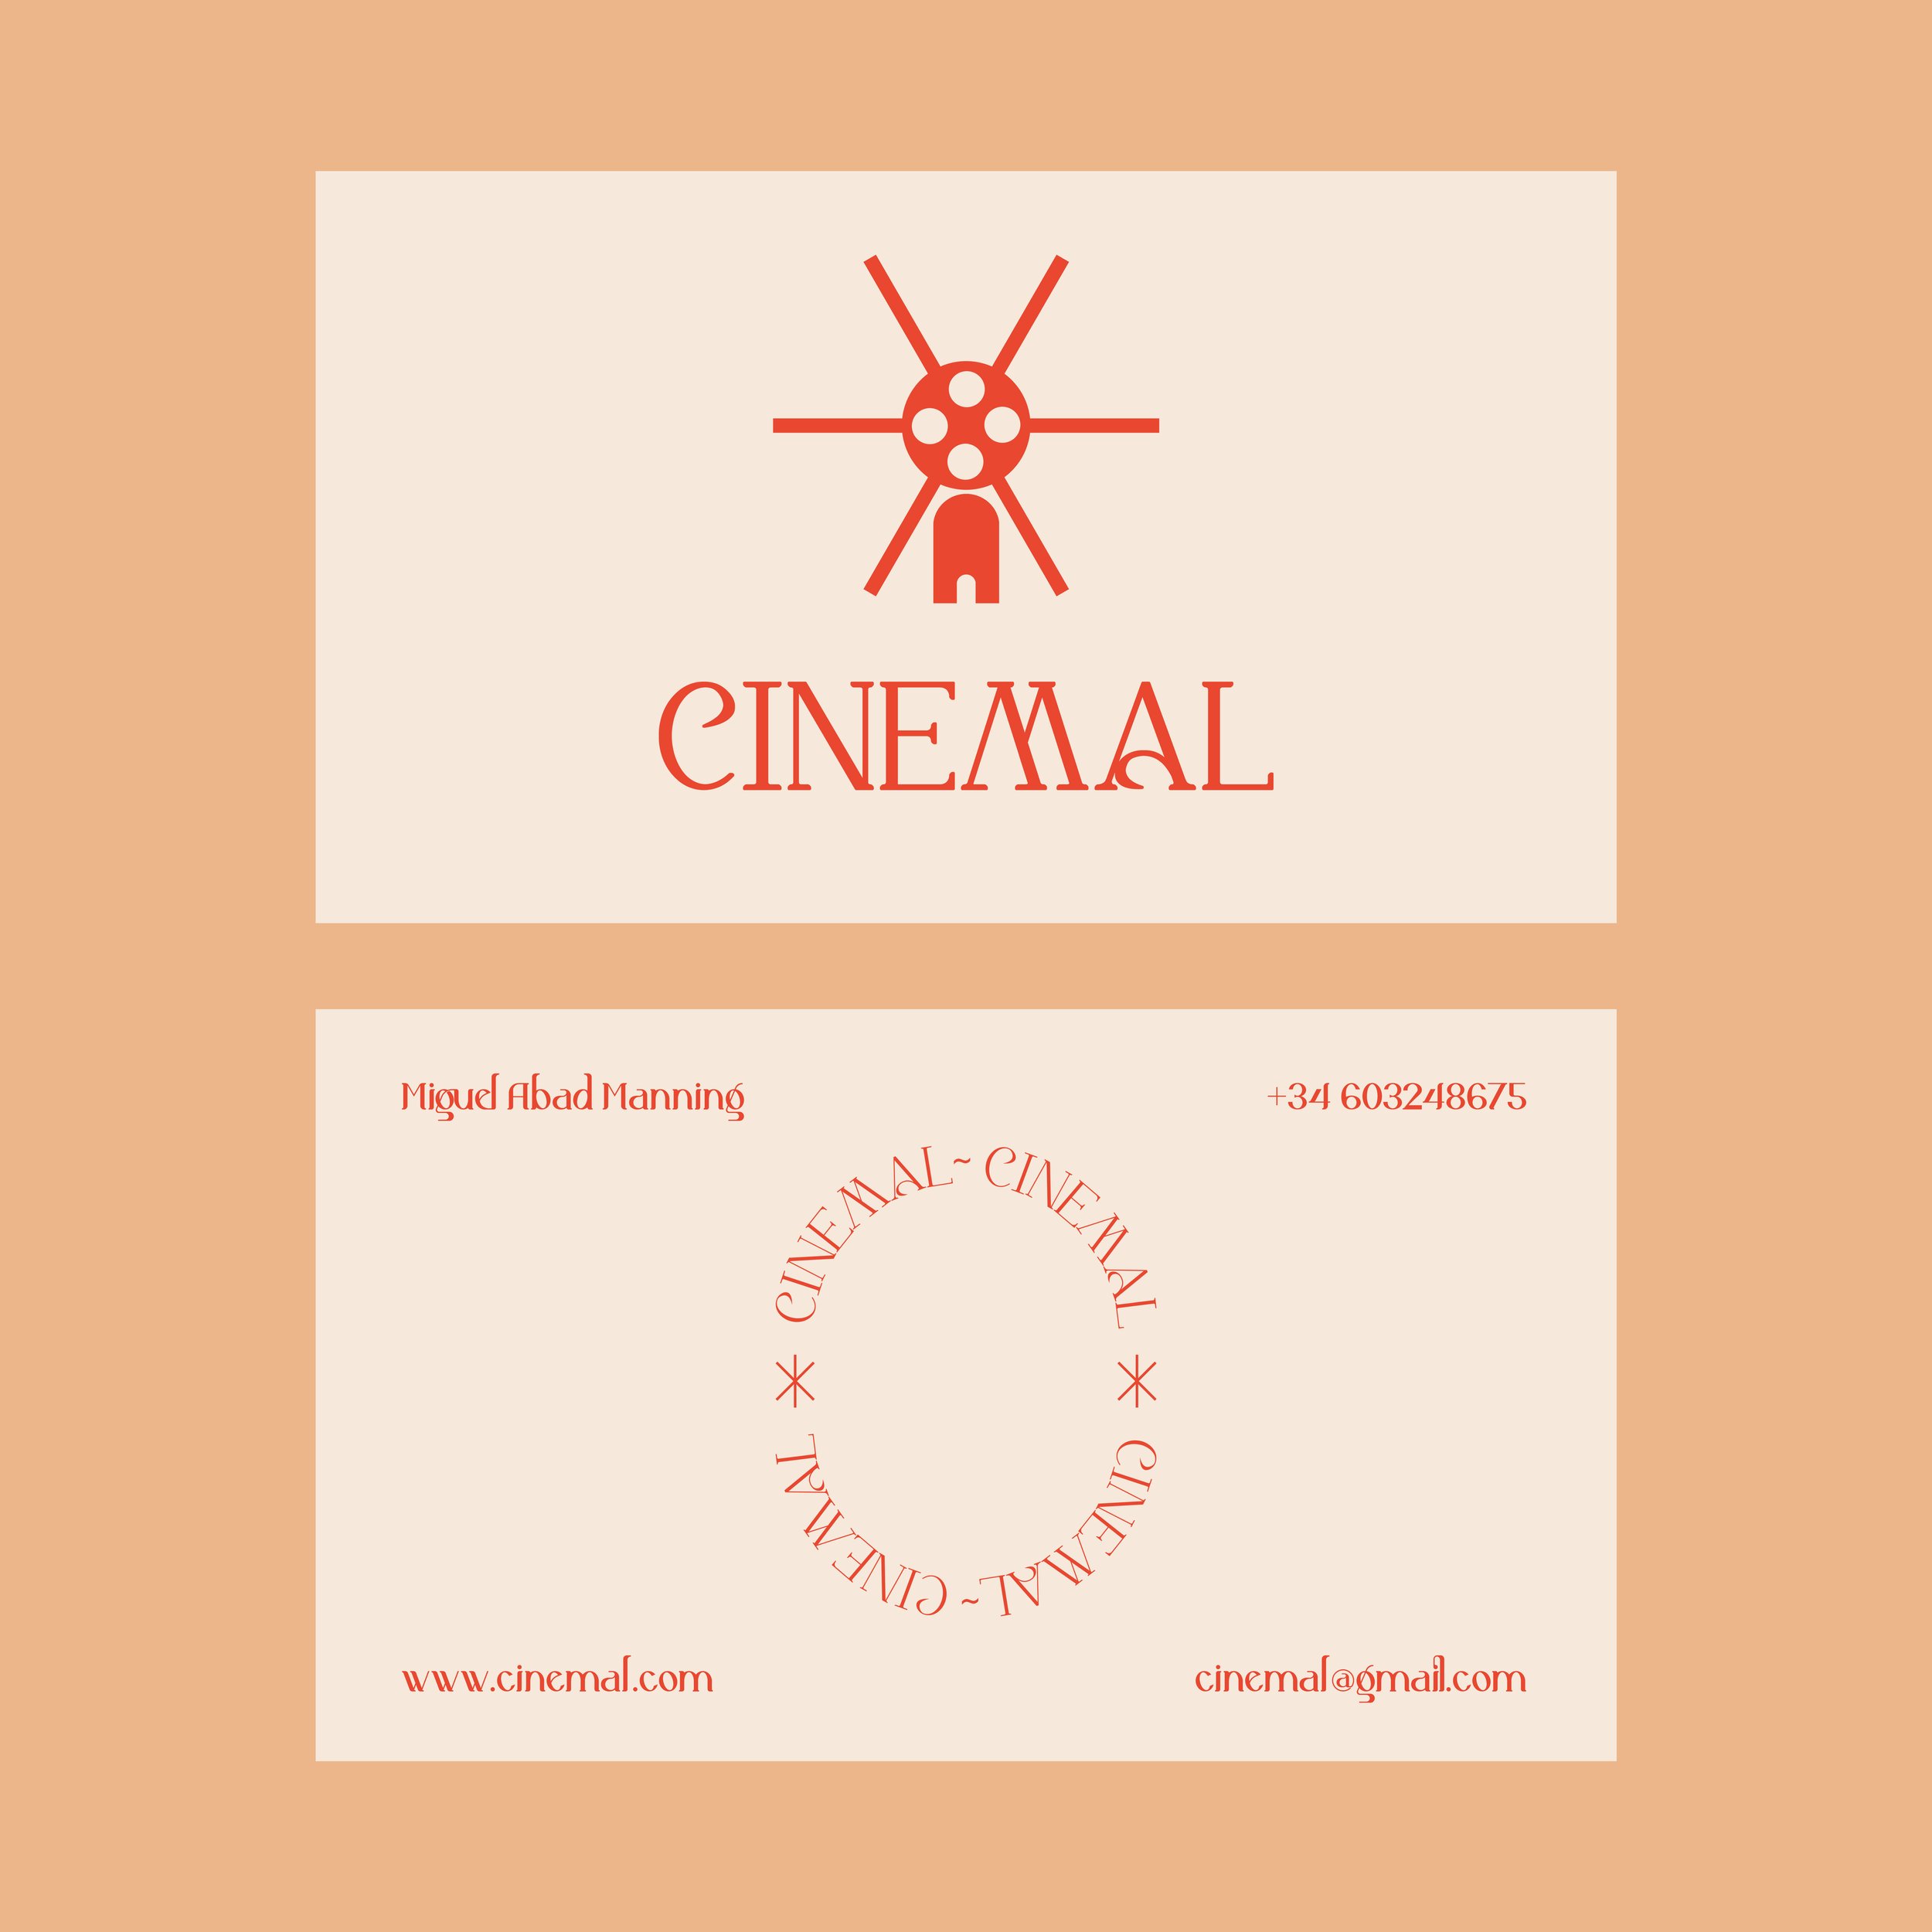 CINEMAL BUSINESS CARDS 1.3.jpg